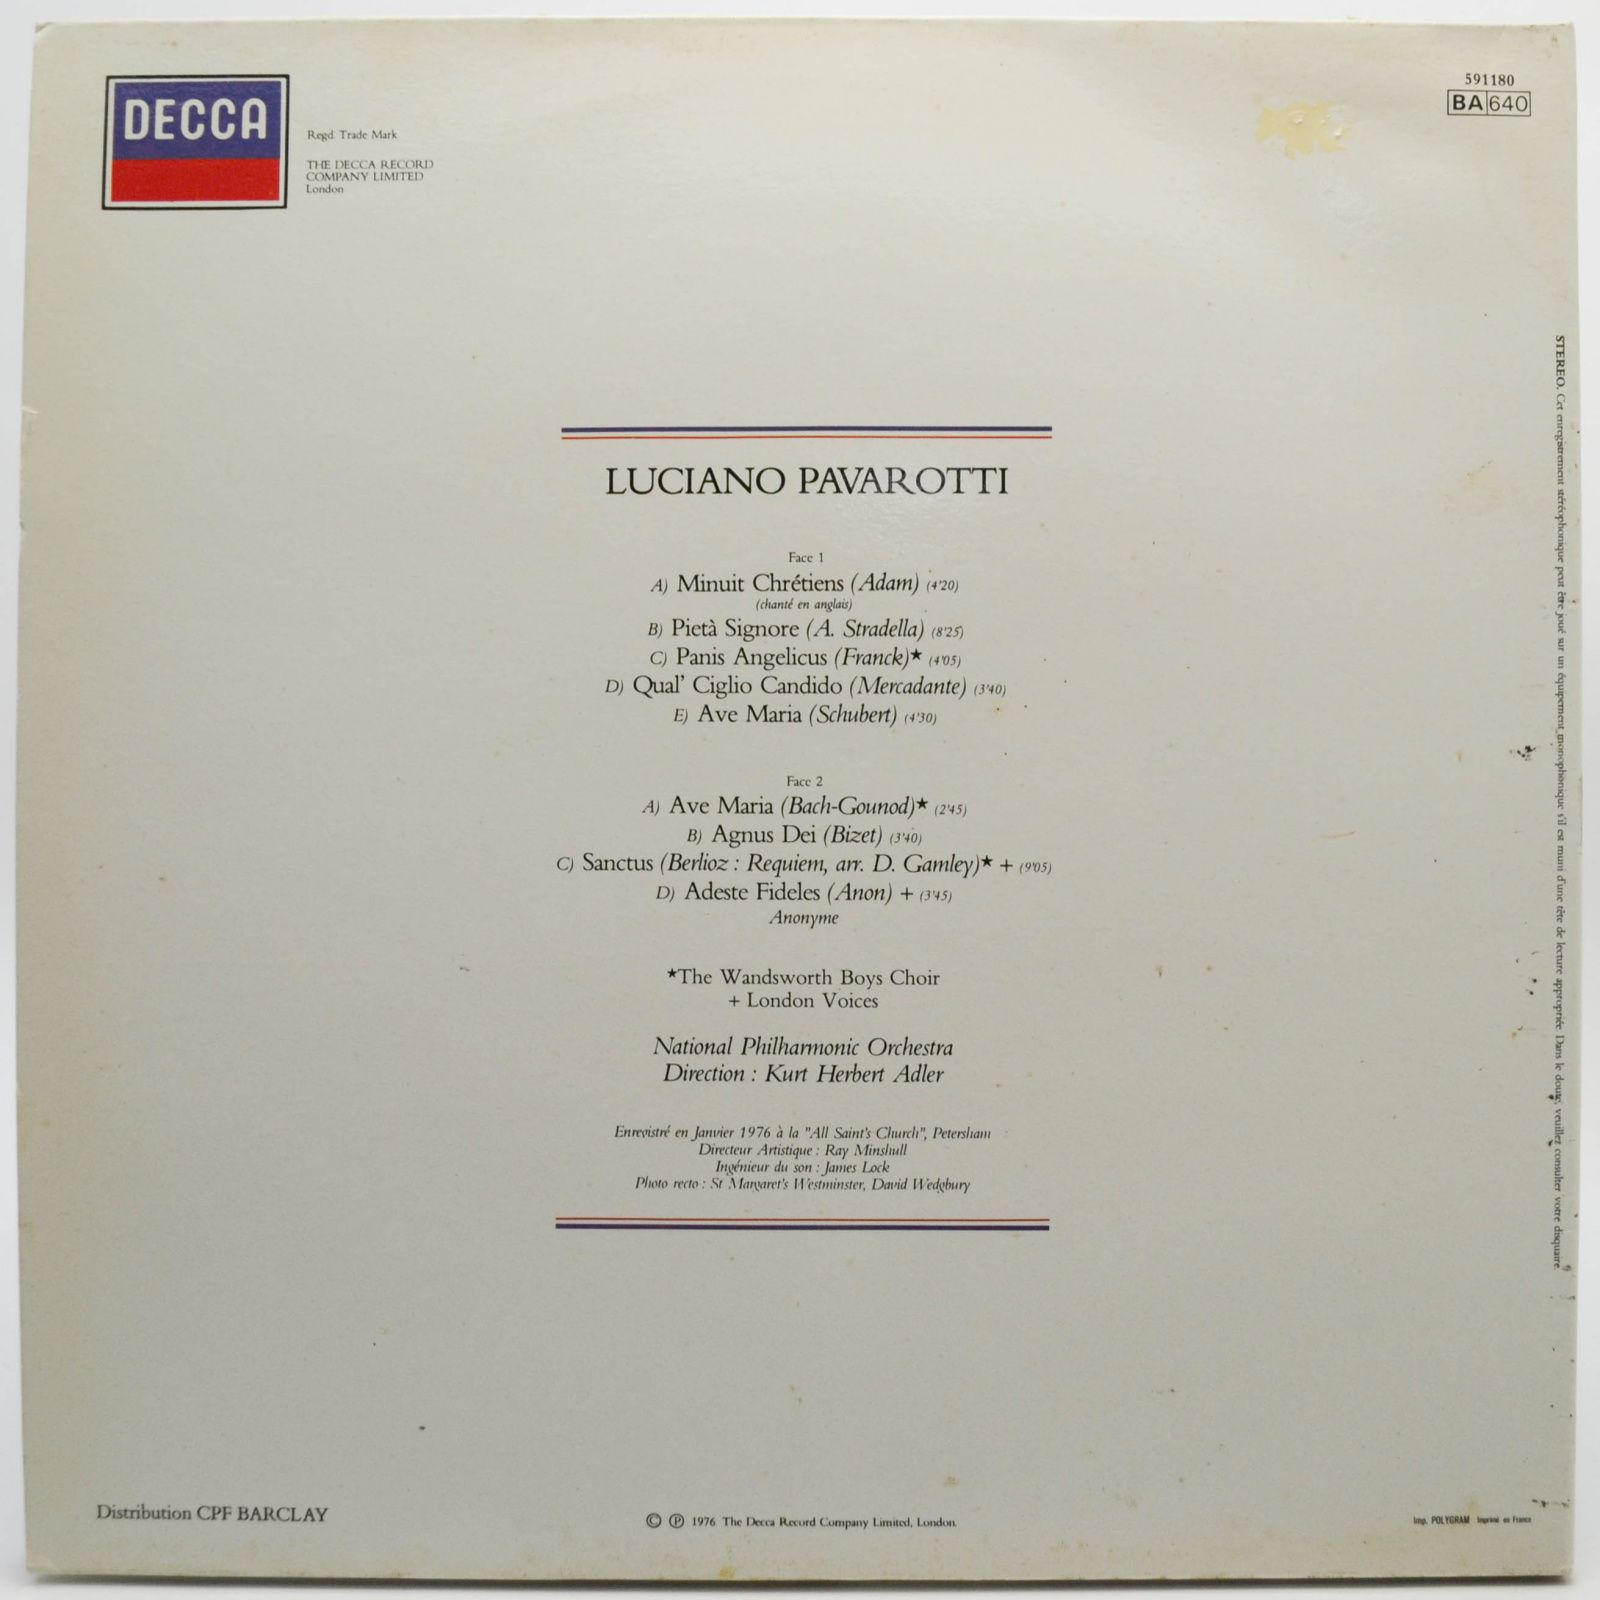 Luciano Pavarotti - Kurt Herbert Adler ● National Philharmonic — "Minuit Chretiens", 1976